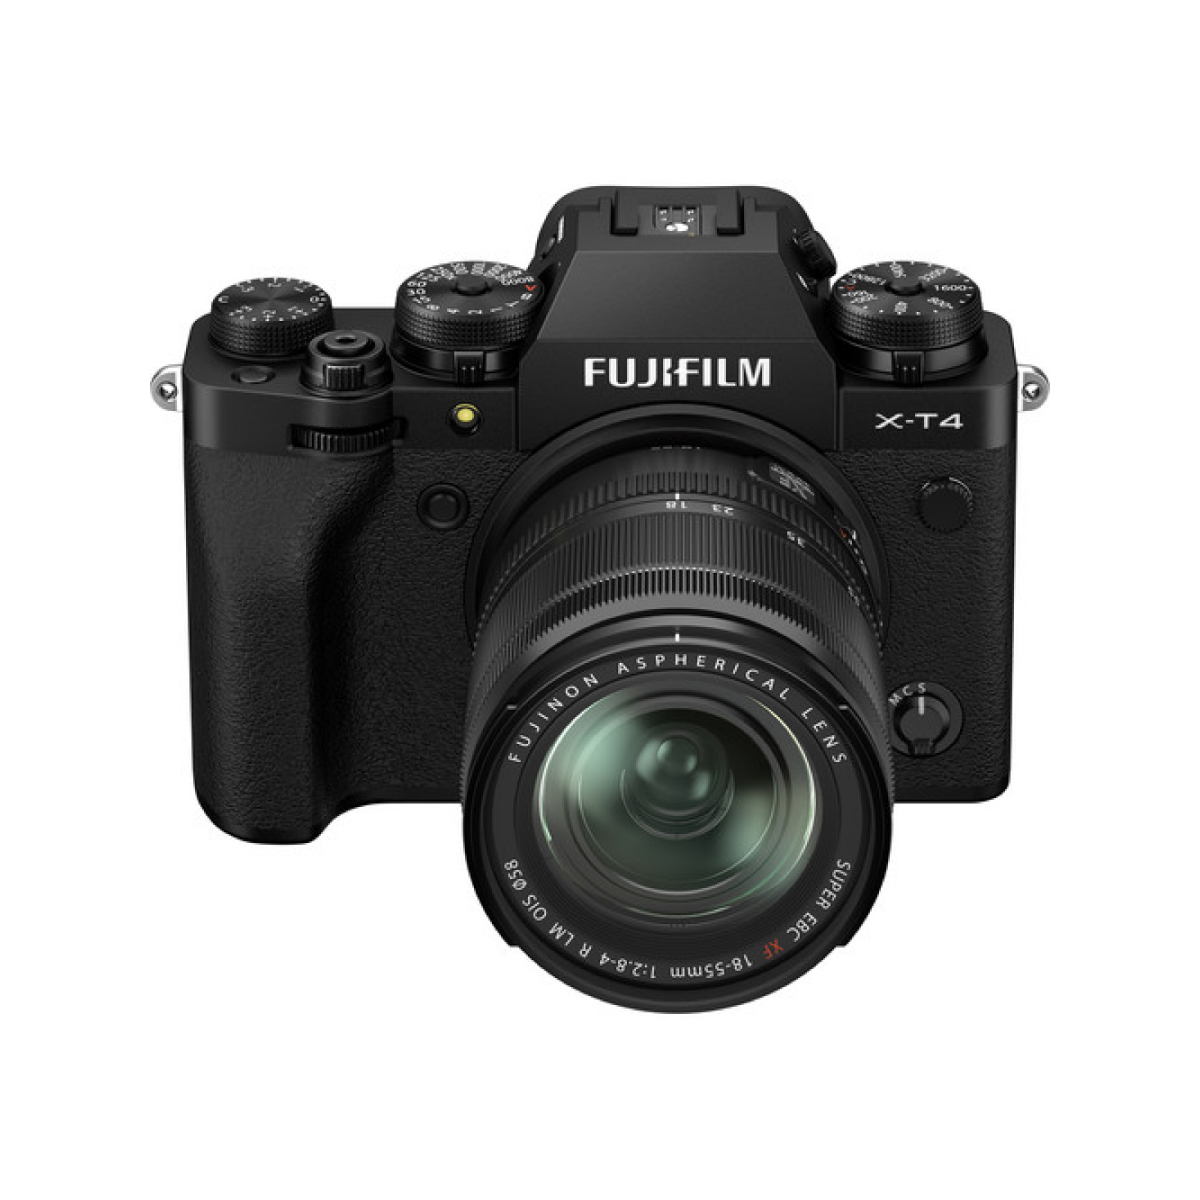 Fujifilm X-T4 26MP Mirrorless Camera Body with XF18-55mm Lens – Black (9)